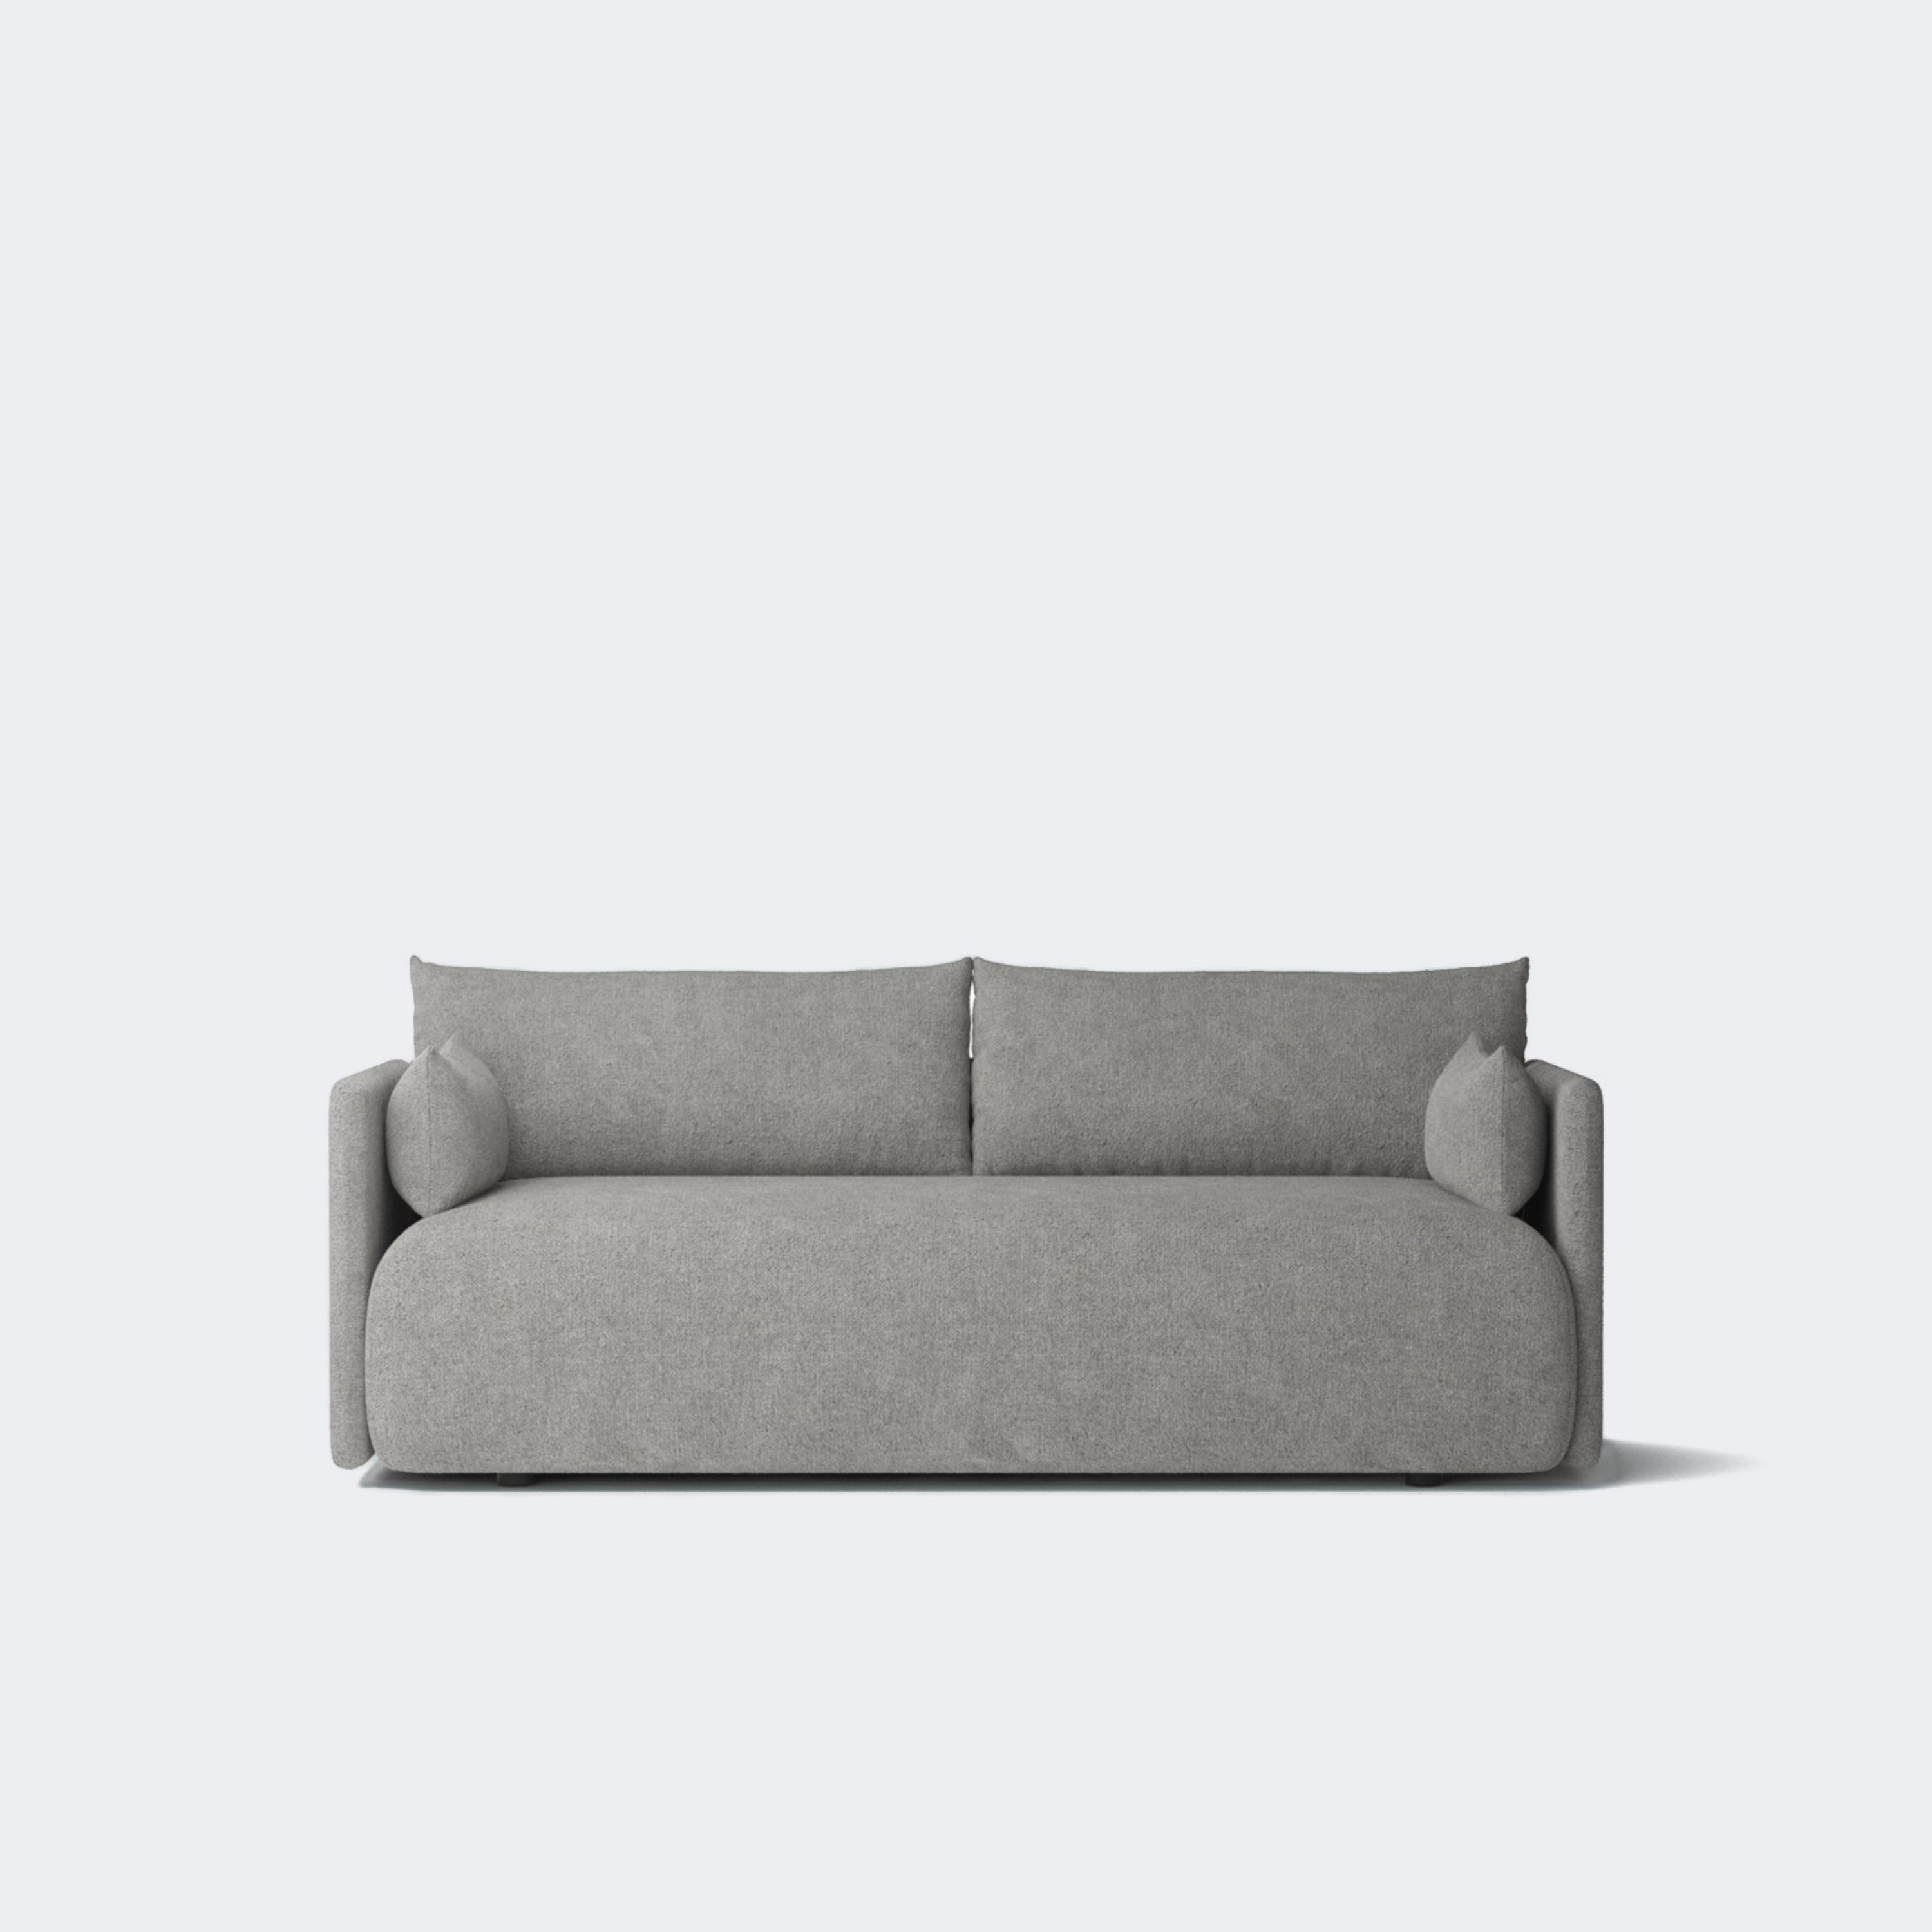 Audo Copenhagen Offset Sofa, 2 Seater Made To Order (12-14 Weeks) Audo Boucle #16 (Dark Grey) - KANSO